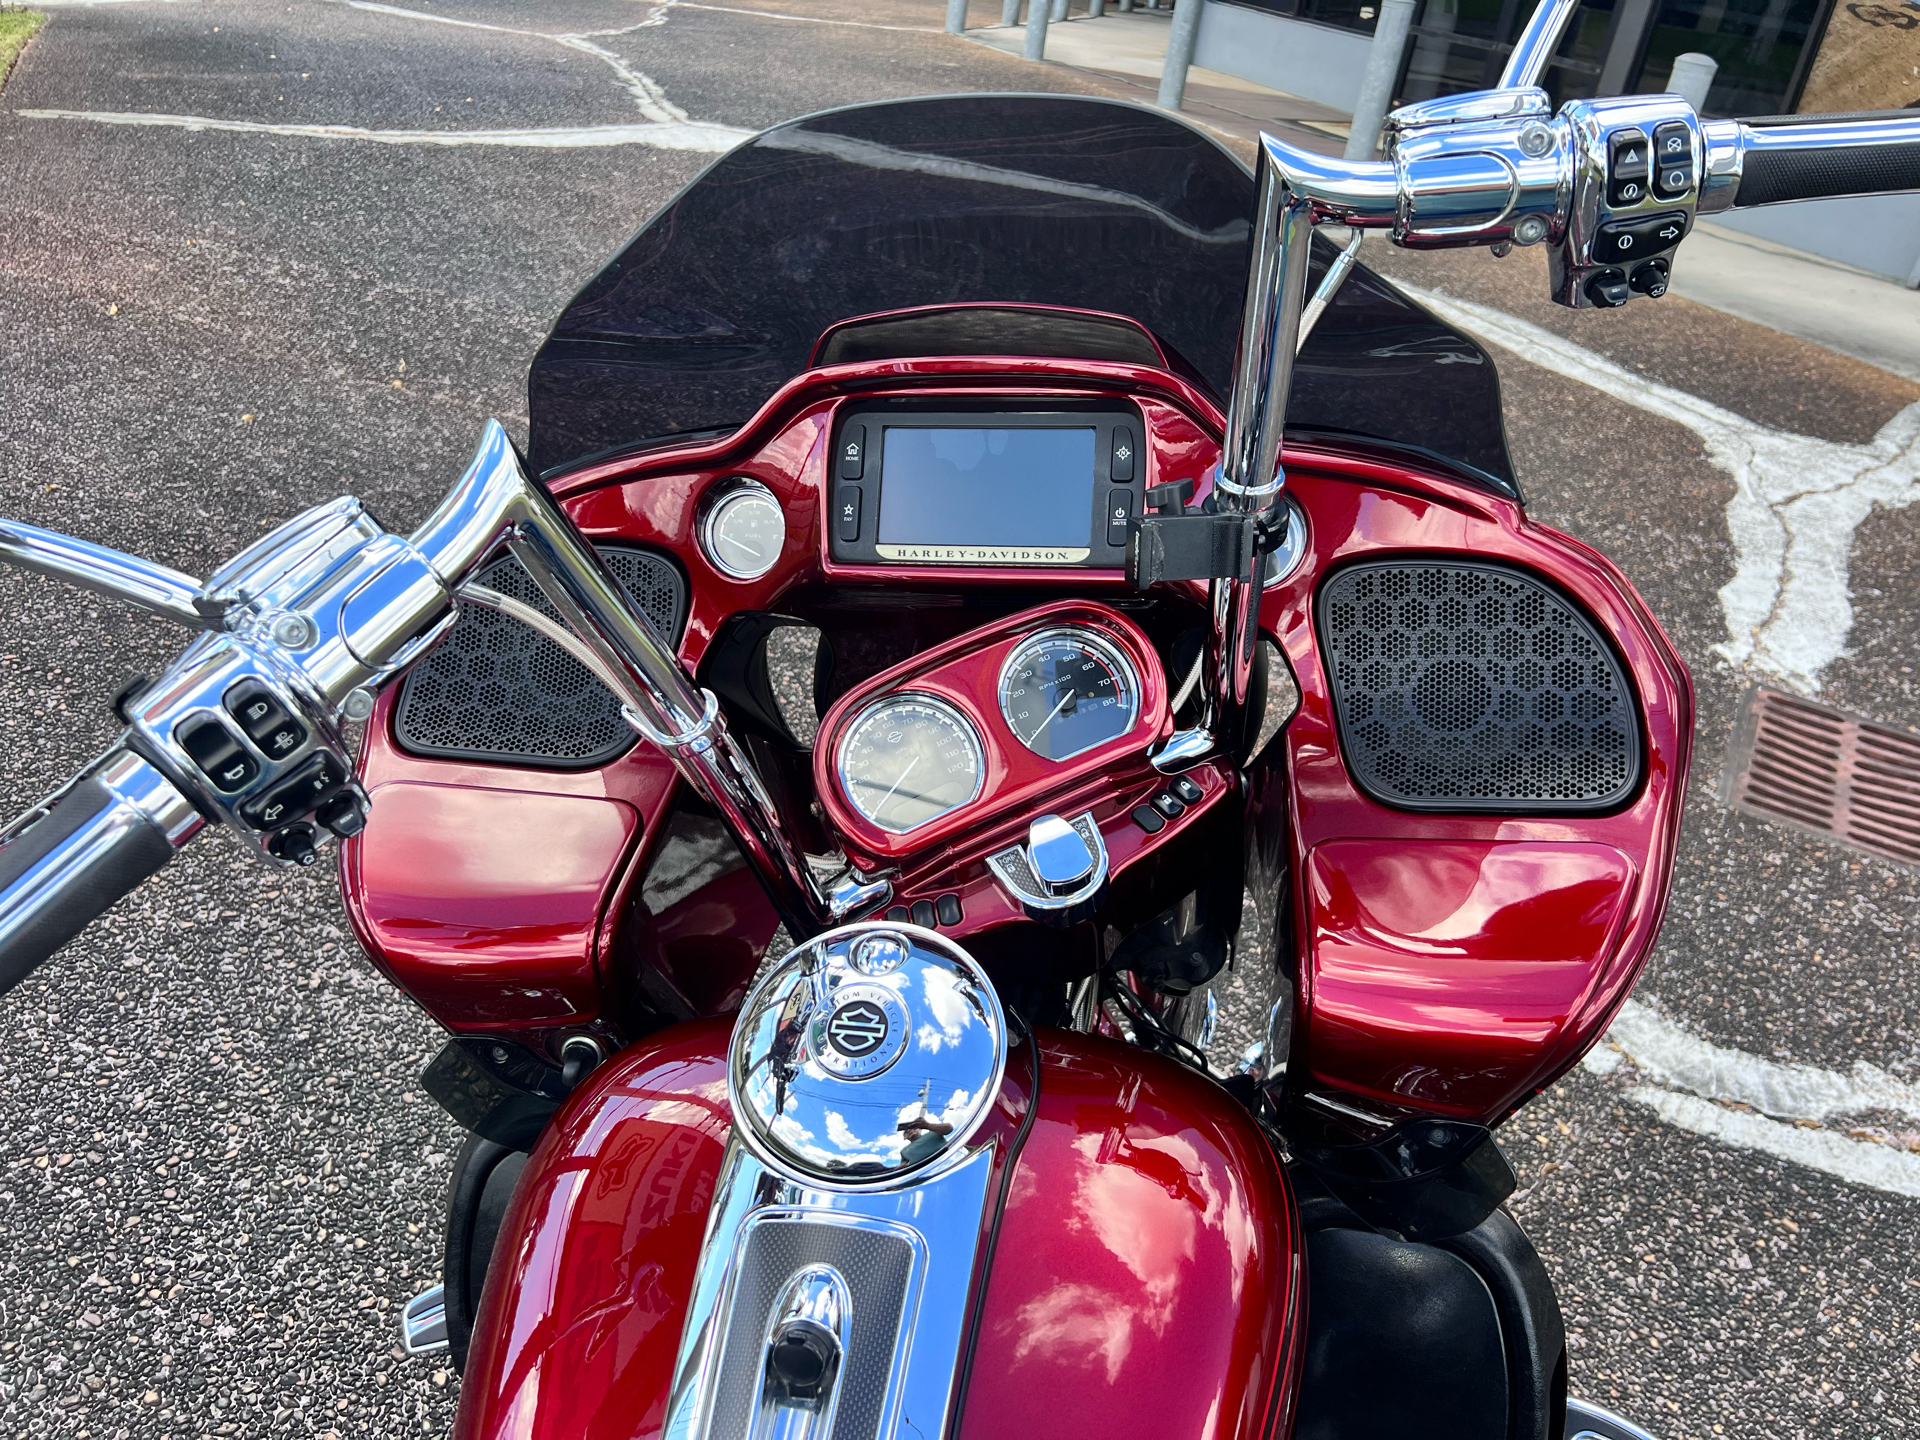 2015 Harley-Davidson CVO™ Road Glide® Ultra in Hialeah, Florida - Photo 11